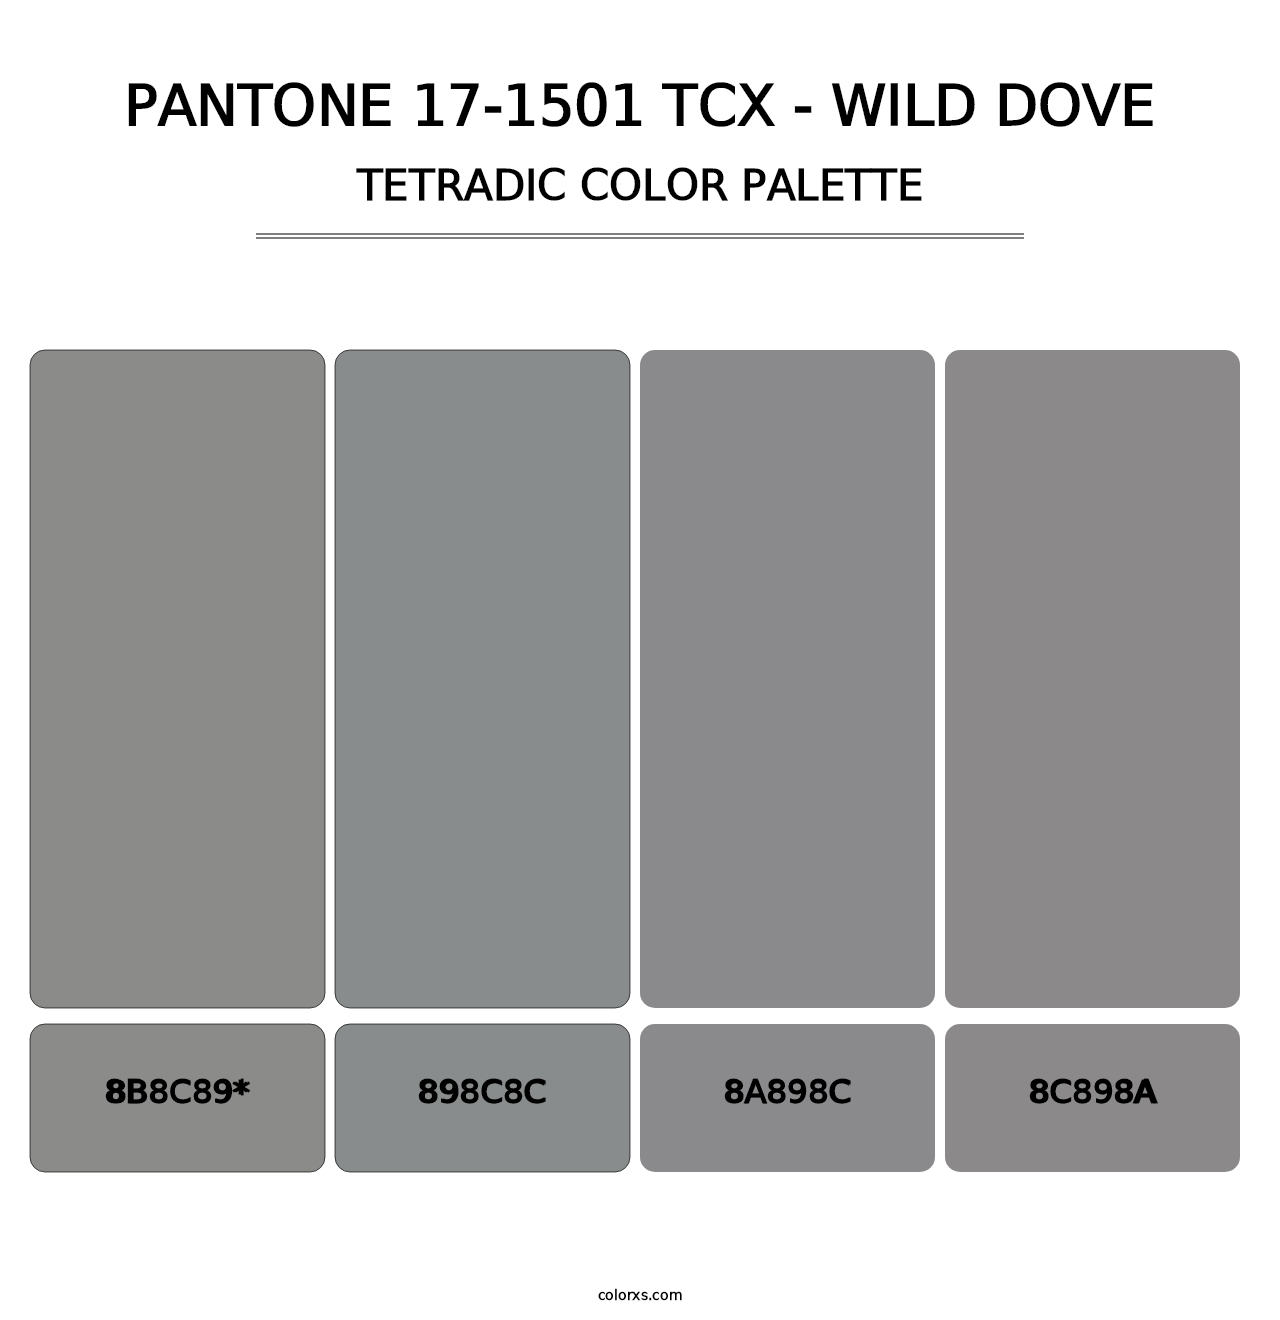 PANTONE 17-1501 TCX - Wild Dove - Tetradic Color Palette